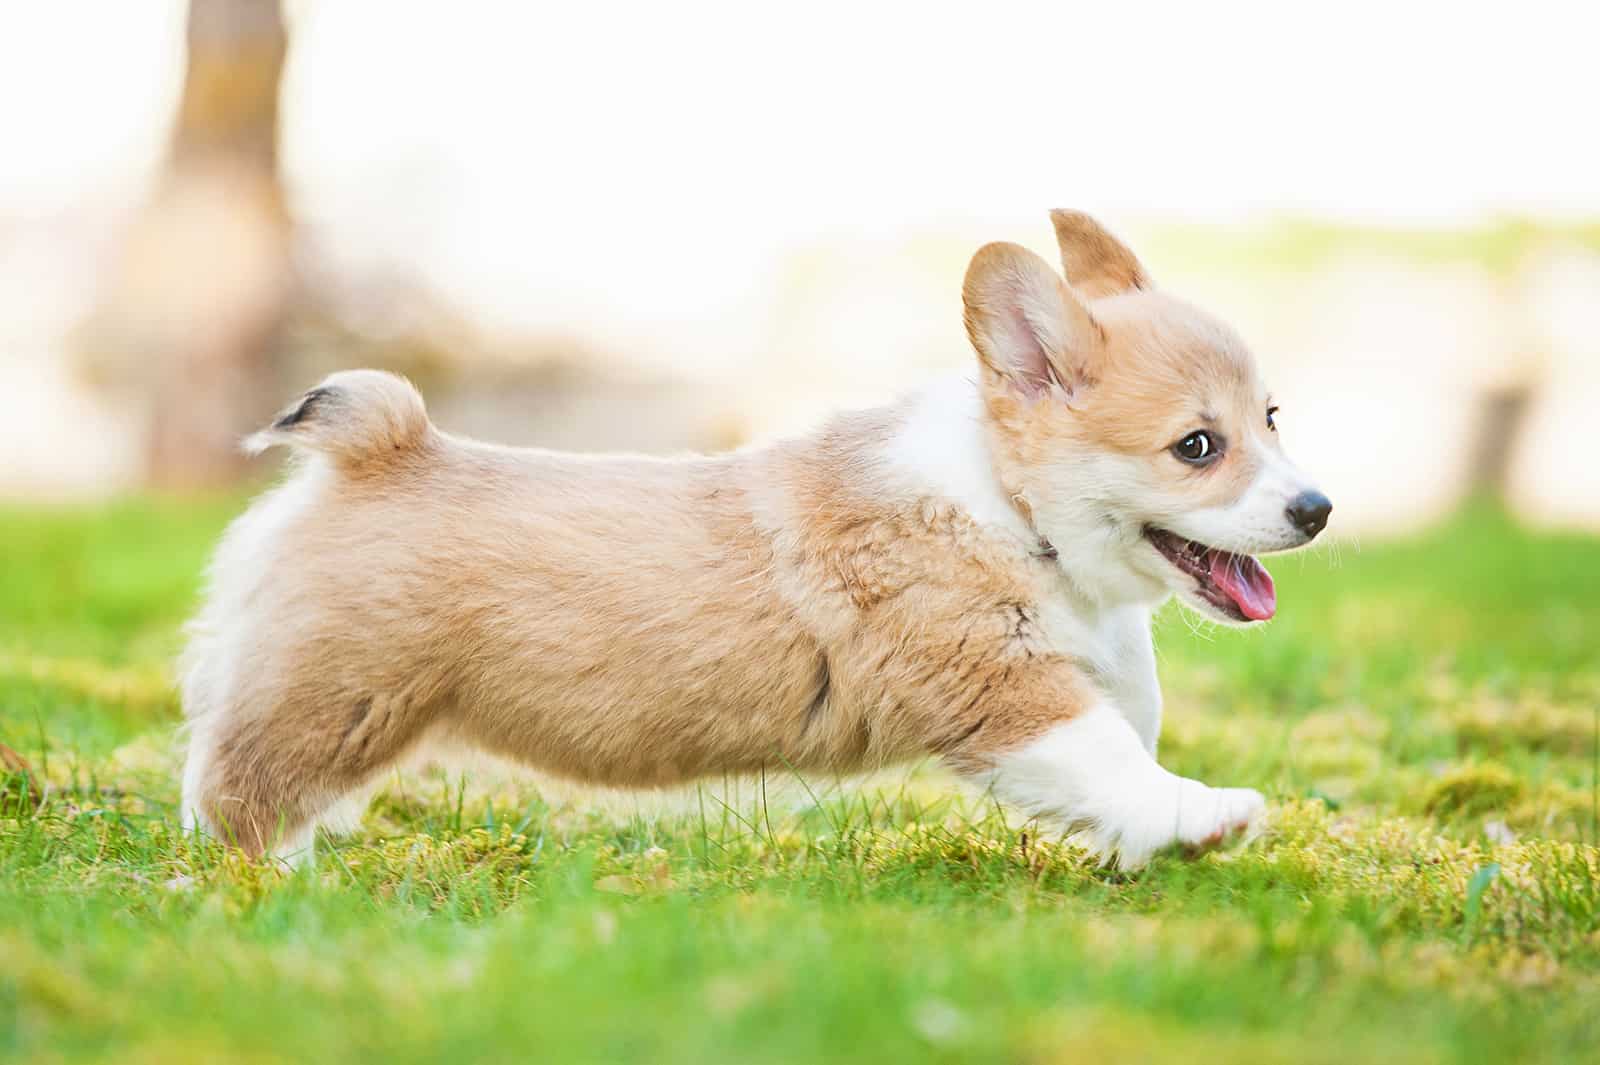  corgi puppy running